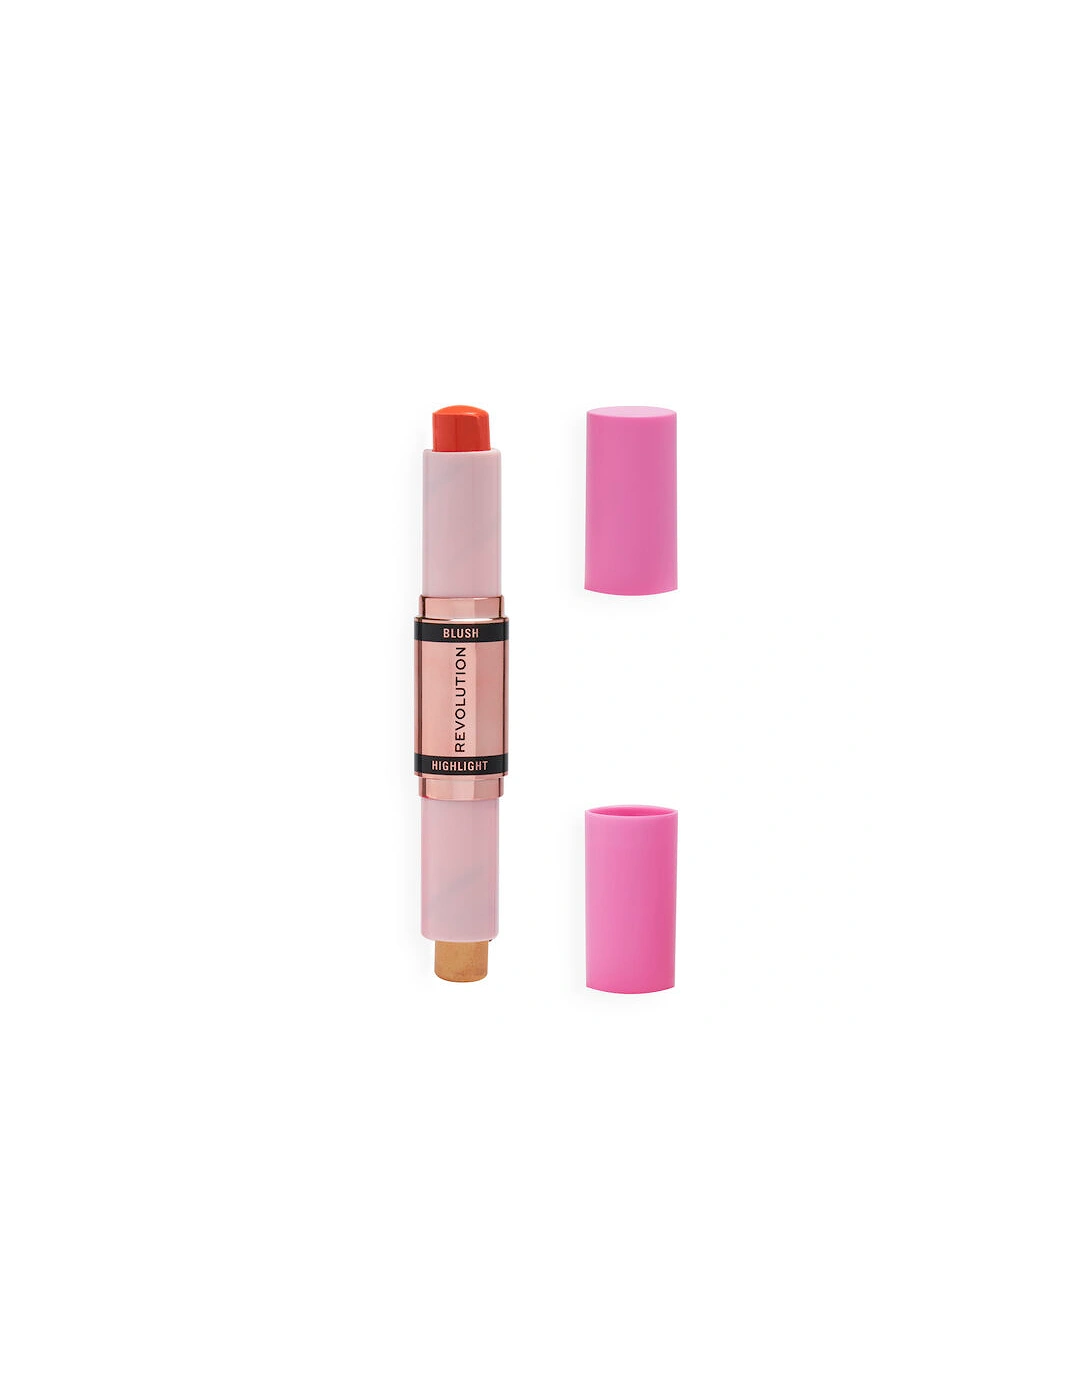 Makeup Blush & Highlight Stick Coral Dew, 2 of 1